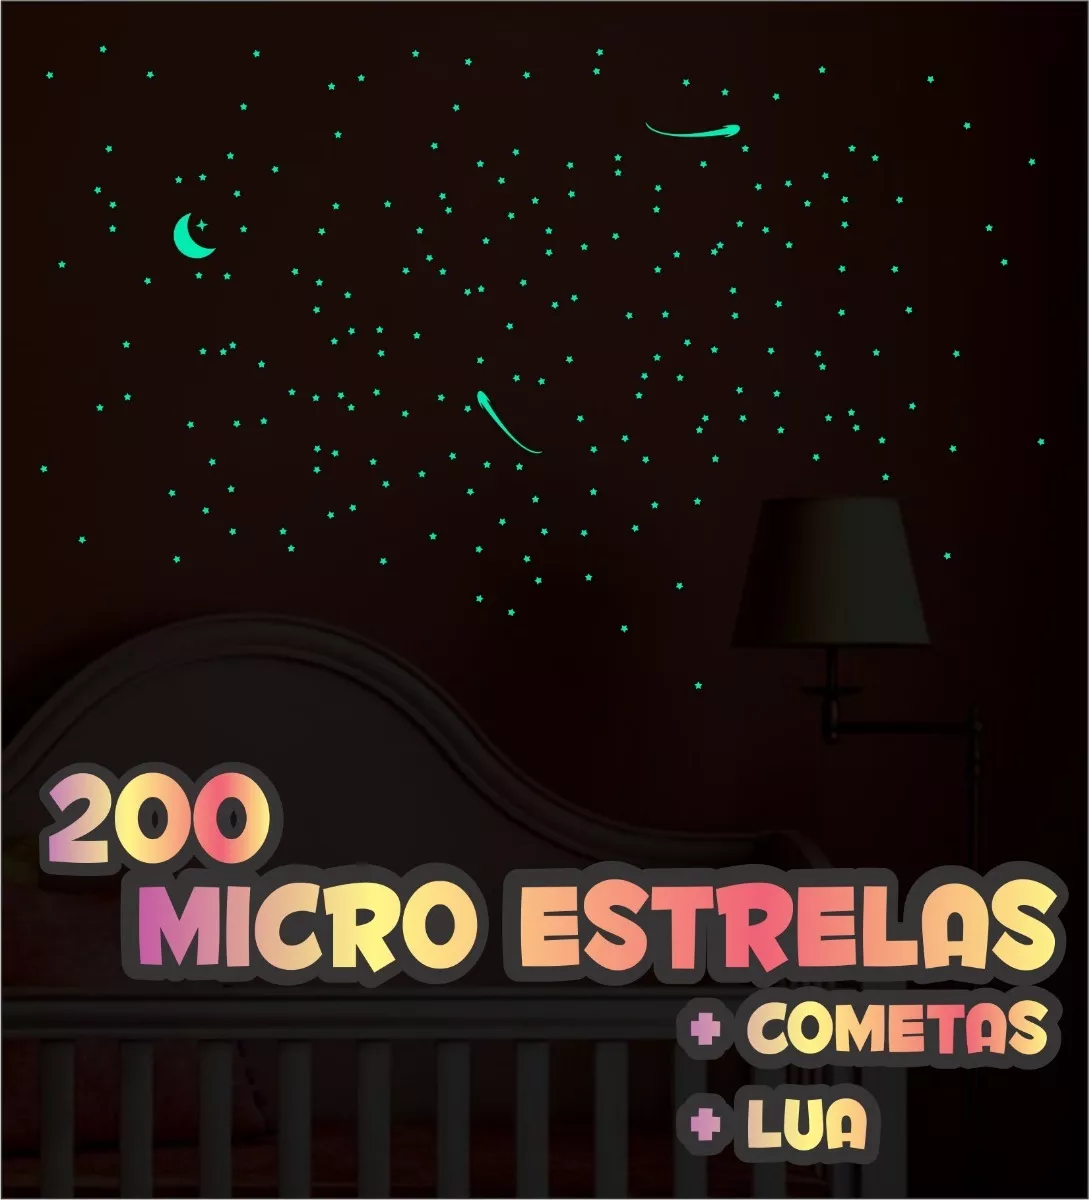 200 Micro Estrelas Que Brilham No Escuro + Cometas + Lua